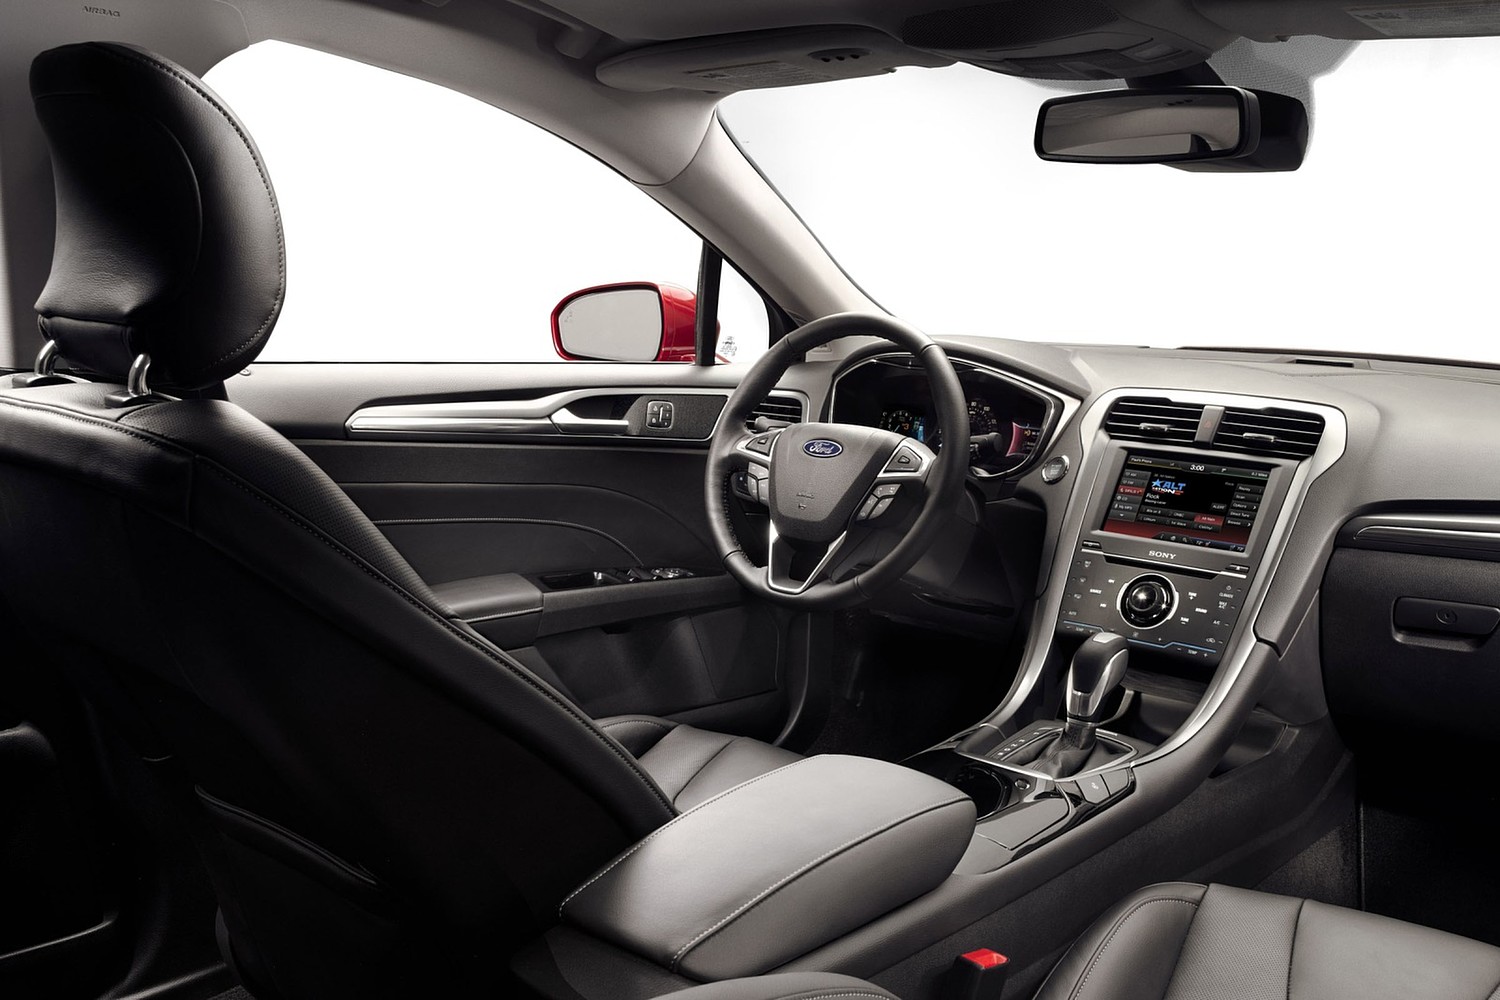 Ford Fusion SE Sedan Interior (2013 model year shown)